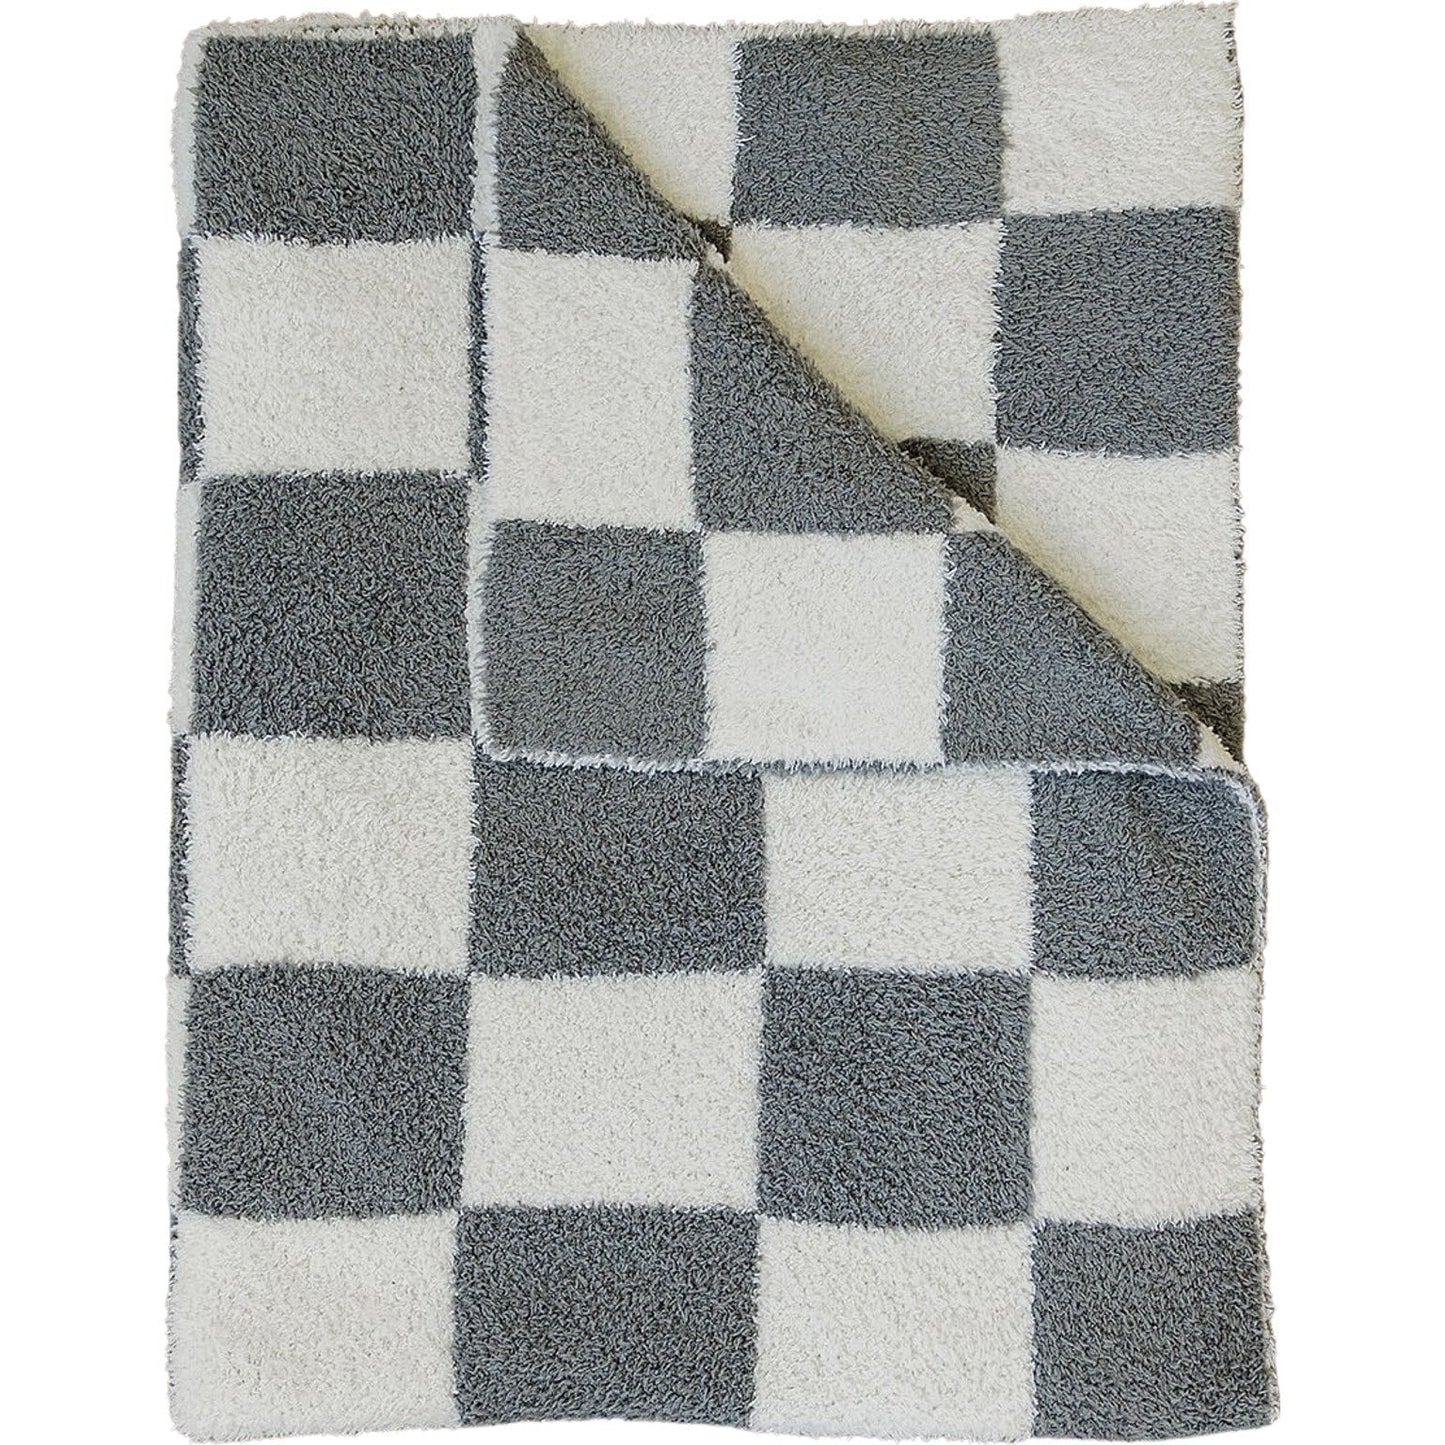 Mebie Baby Checkered Plush Blanket - Charcoal